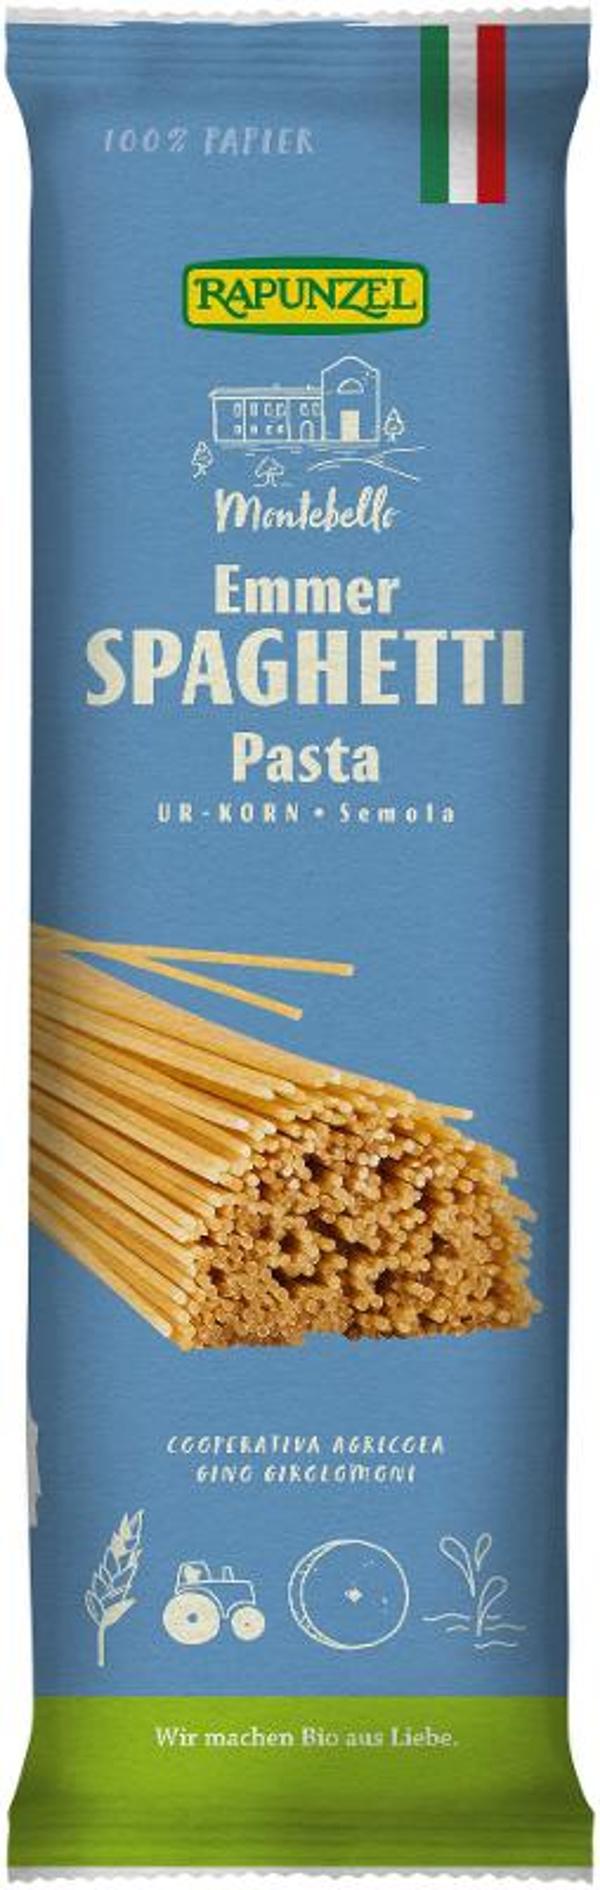 Produktfoto zu Emmer-Spaghetti Semola